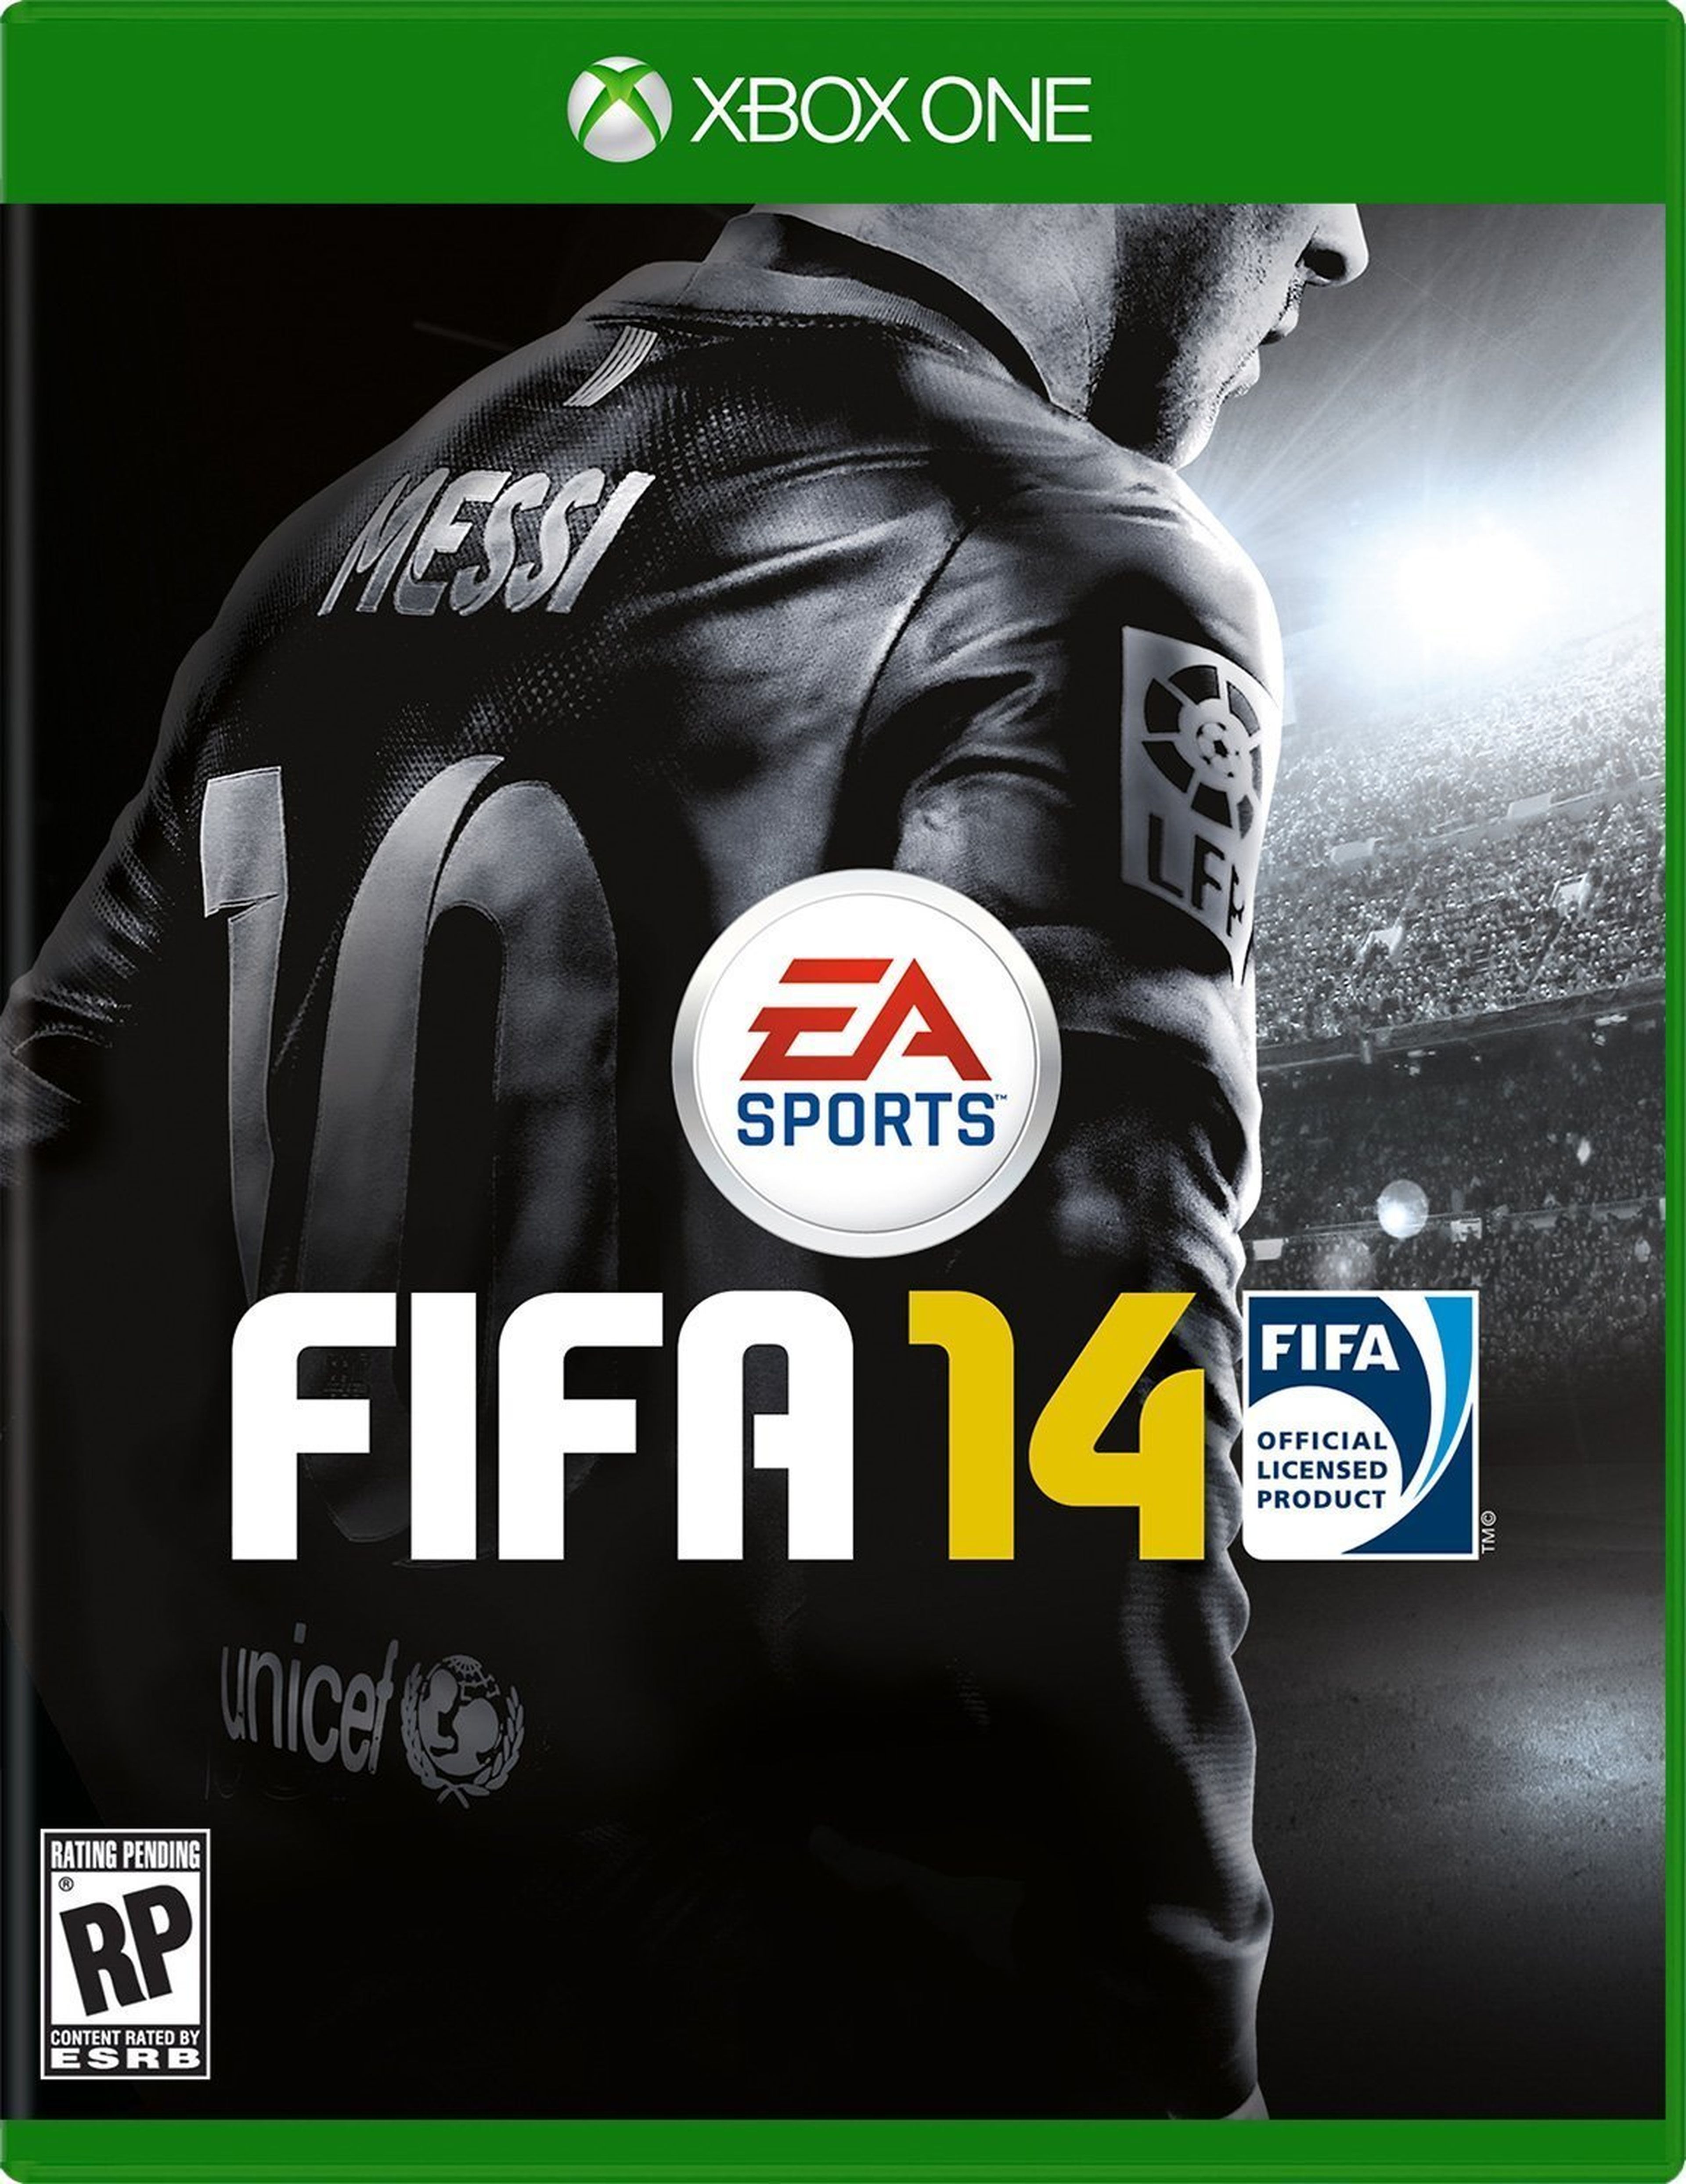 Gamescom 2013: FIFA 14 gratis al reservar Xbox One en Europa